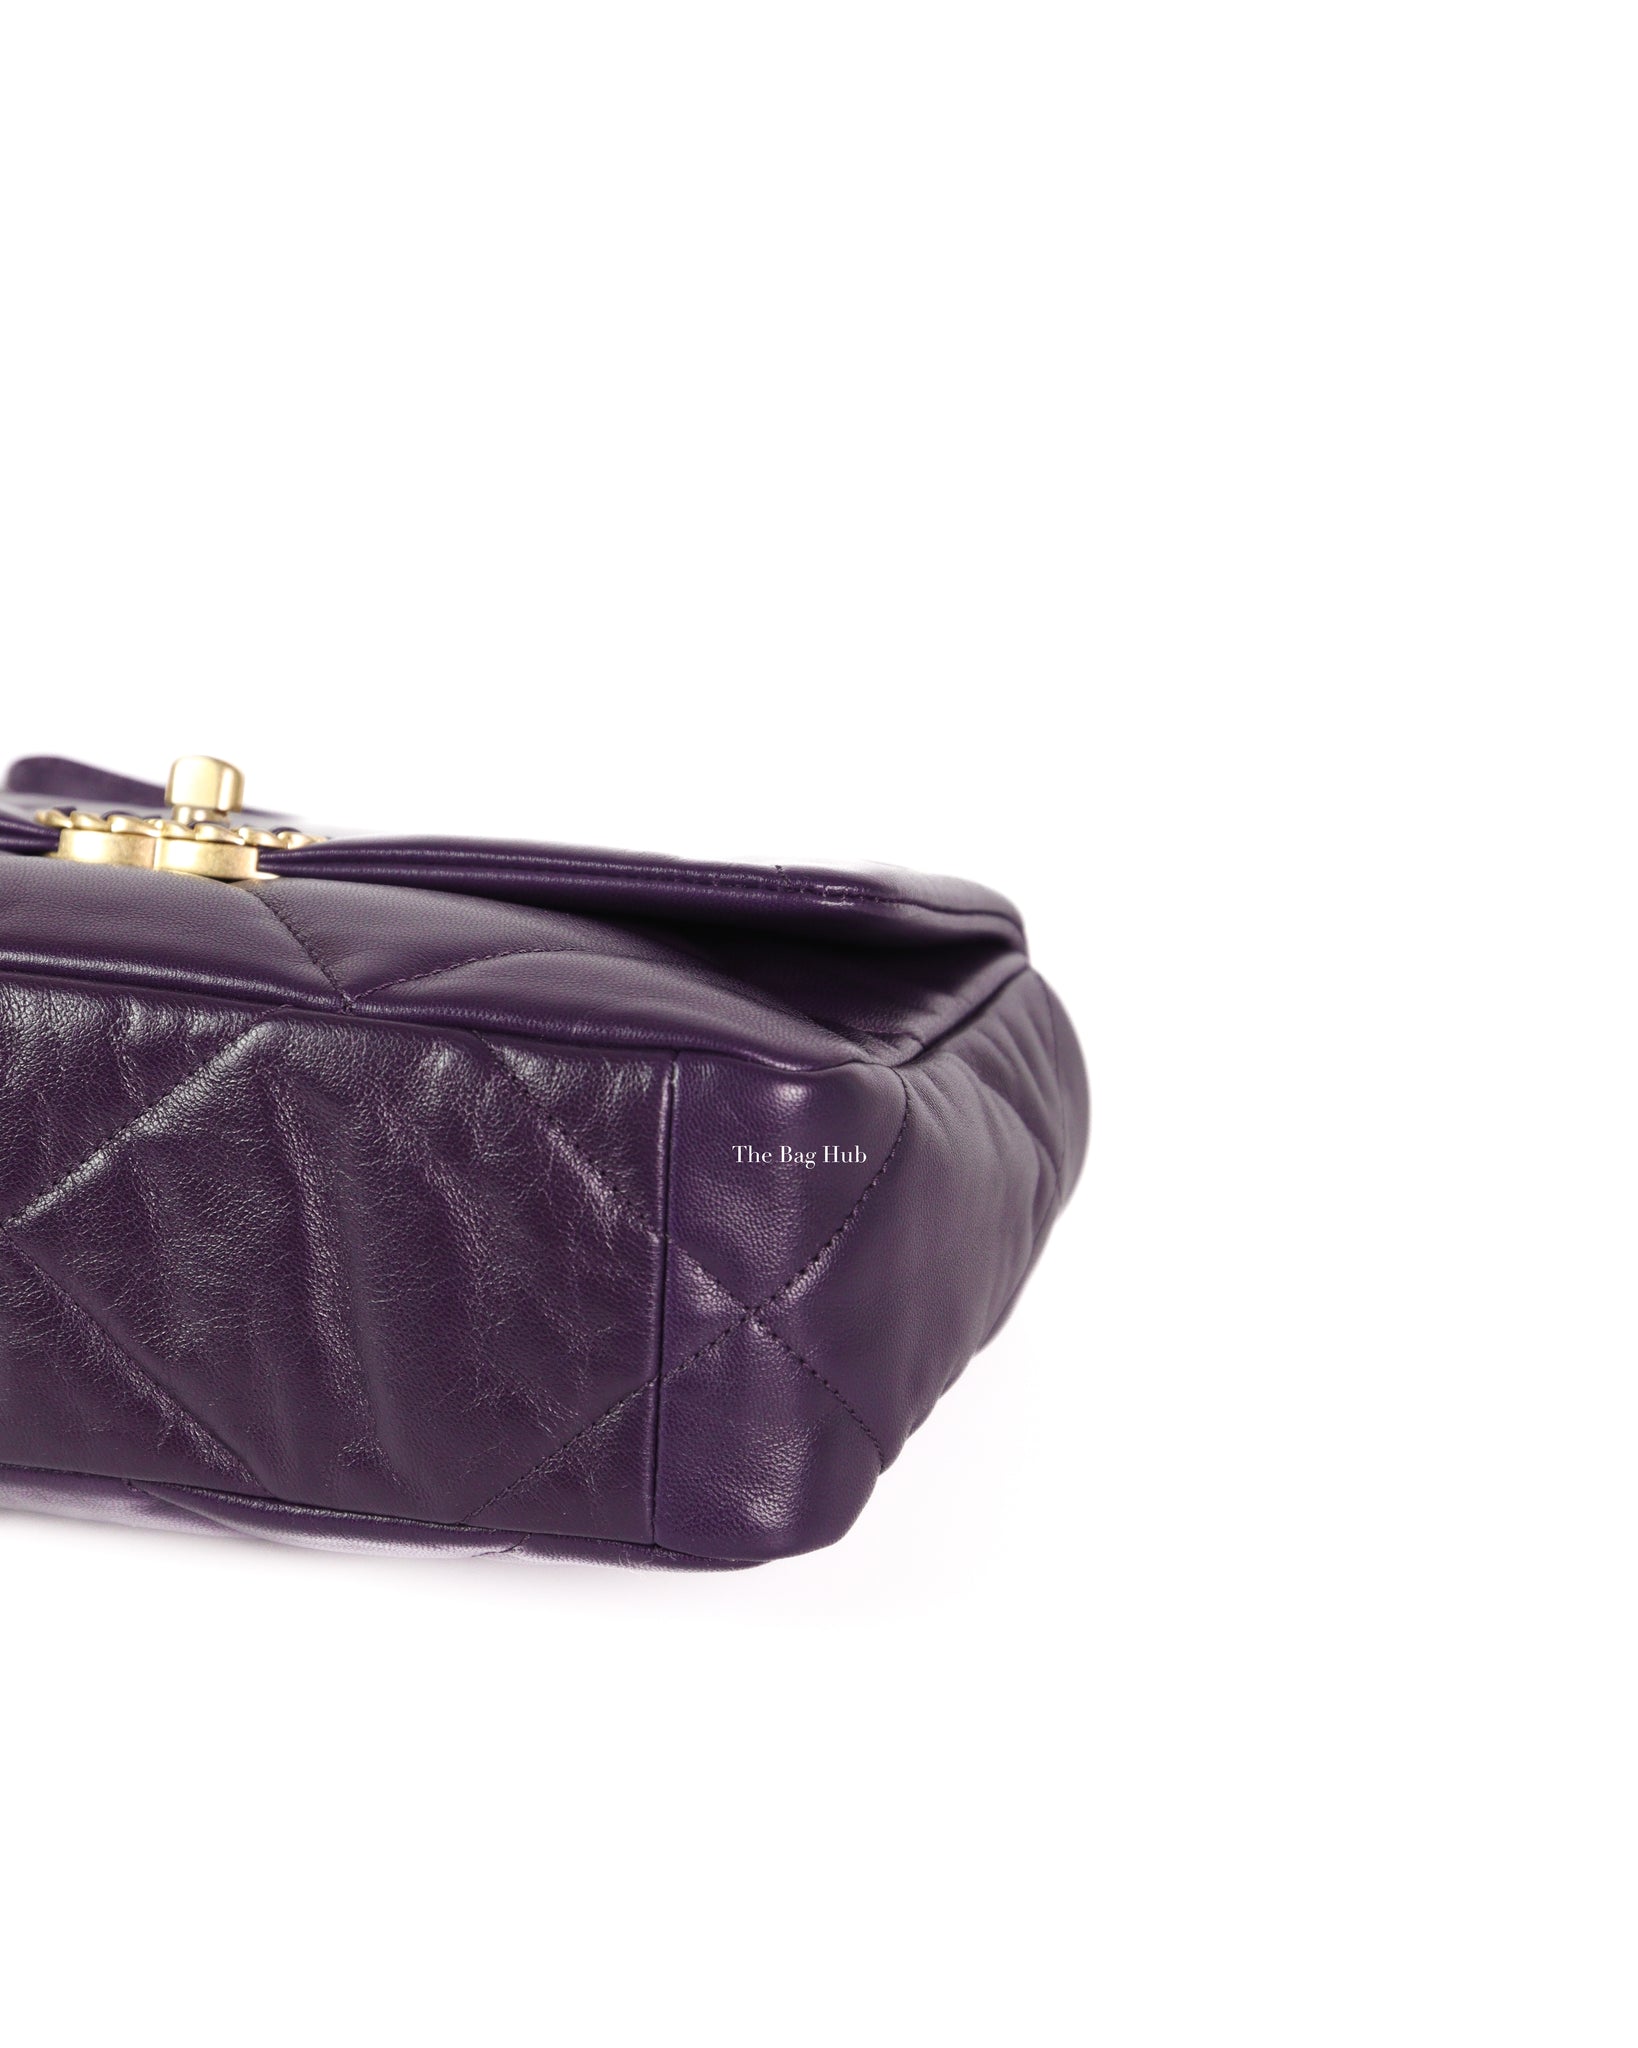 Chanel Raisin C19 Handbag